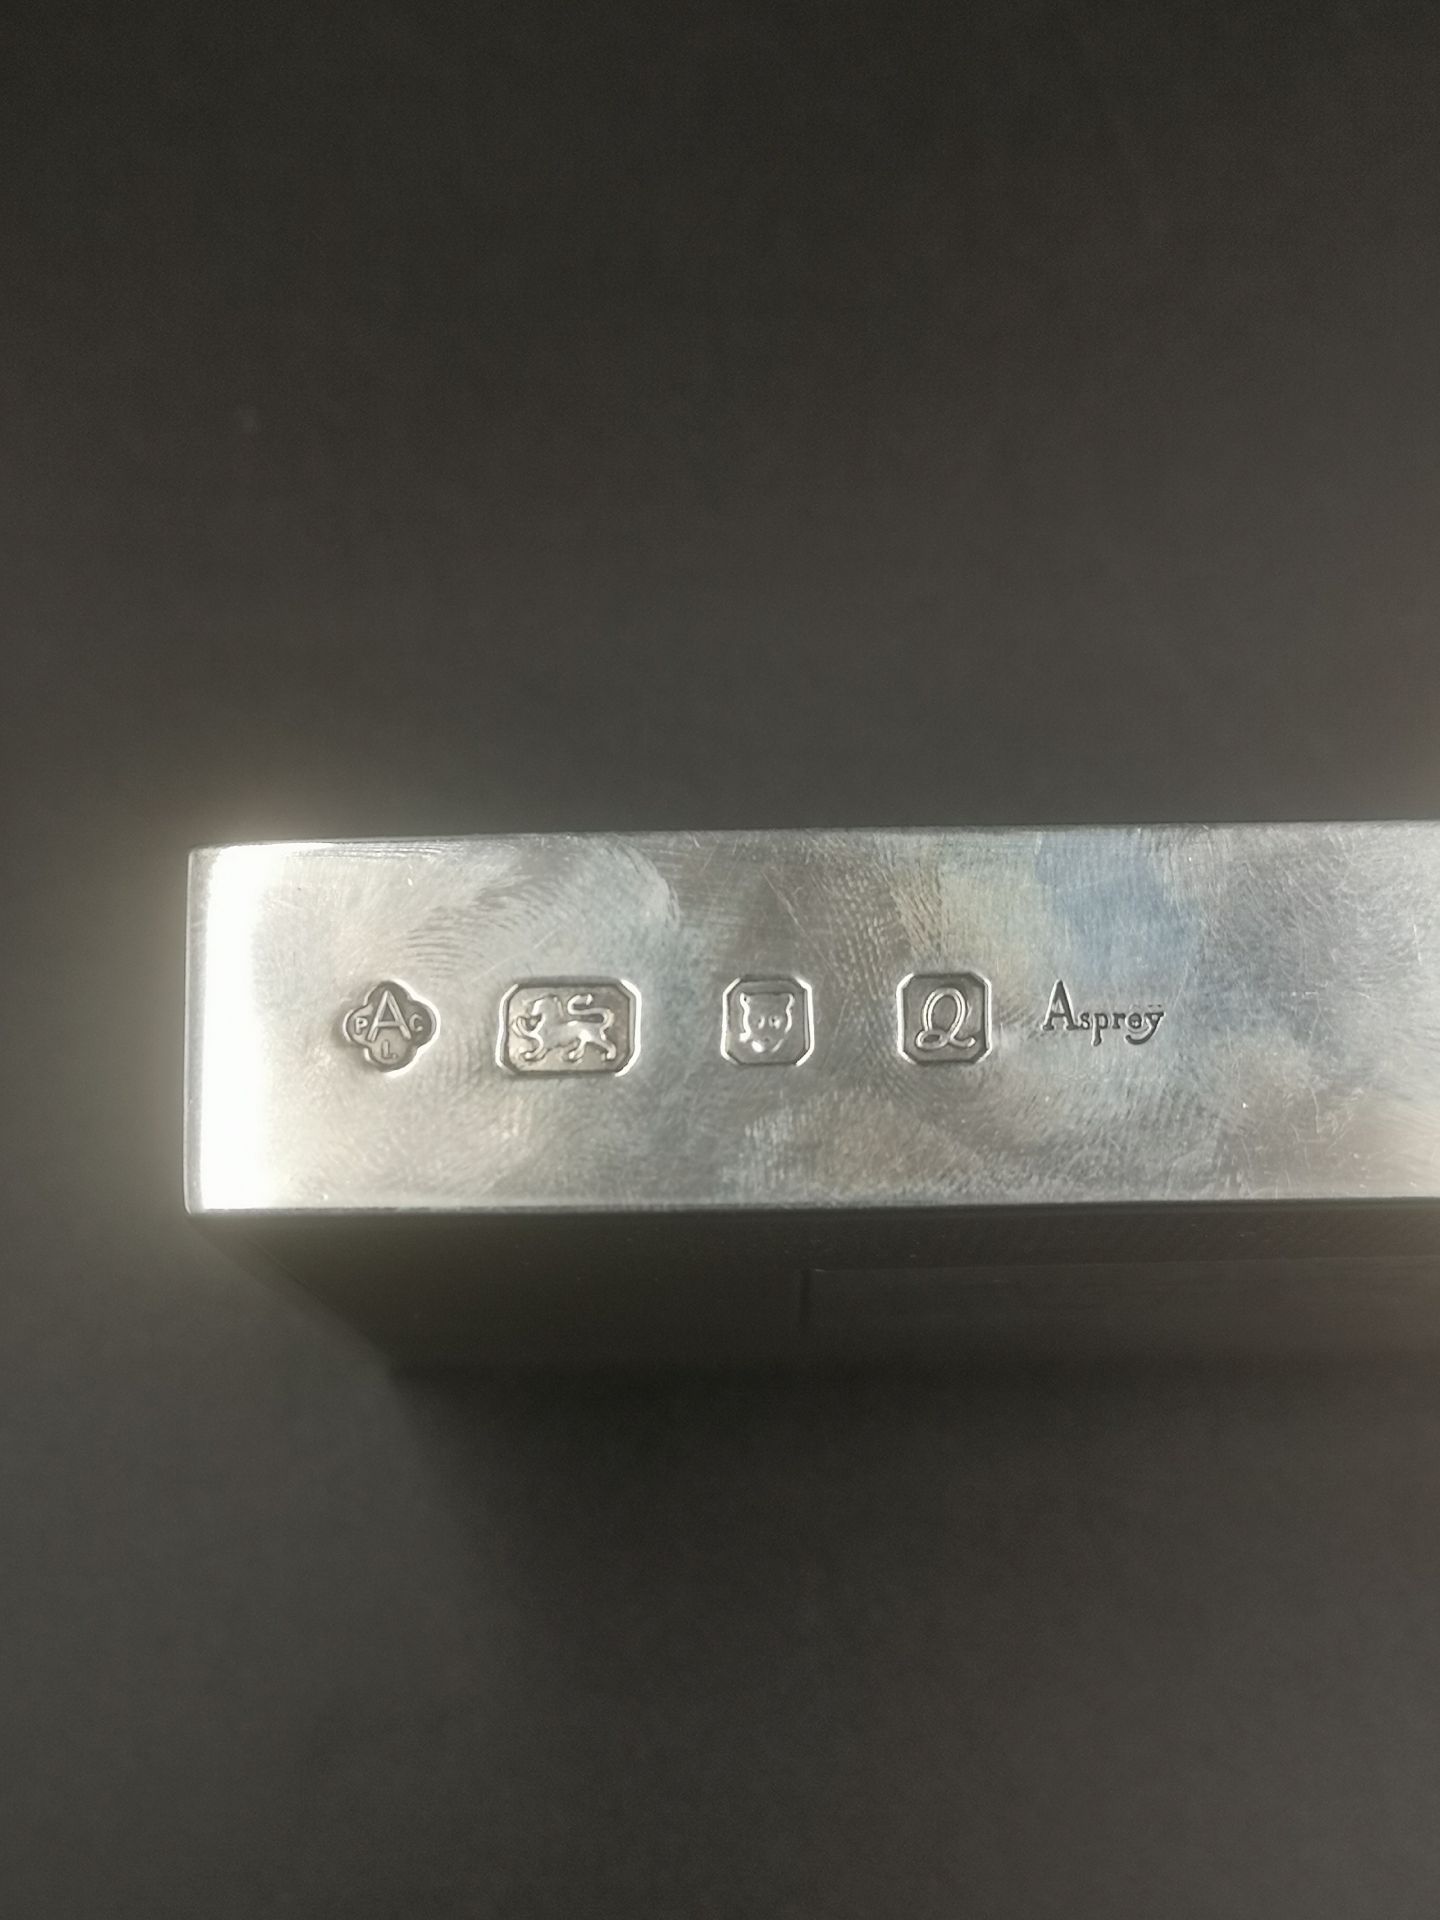 Asprey silver matchbox holder with gold detailing - Image 4 of 5